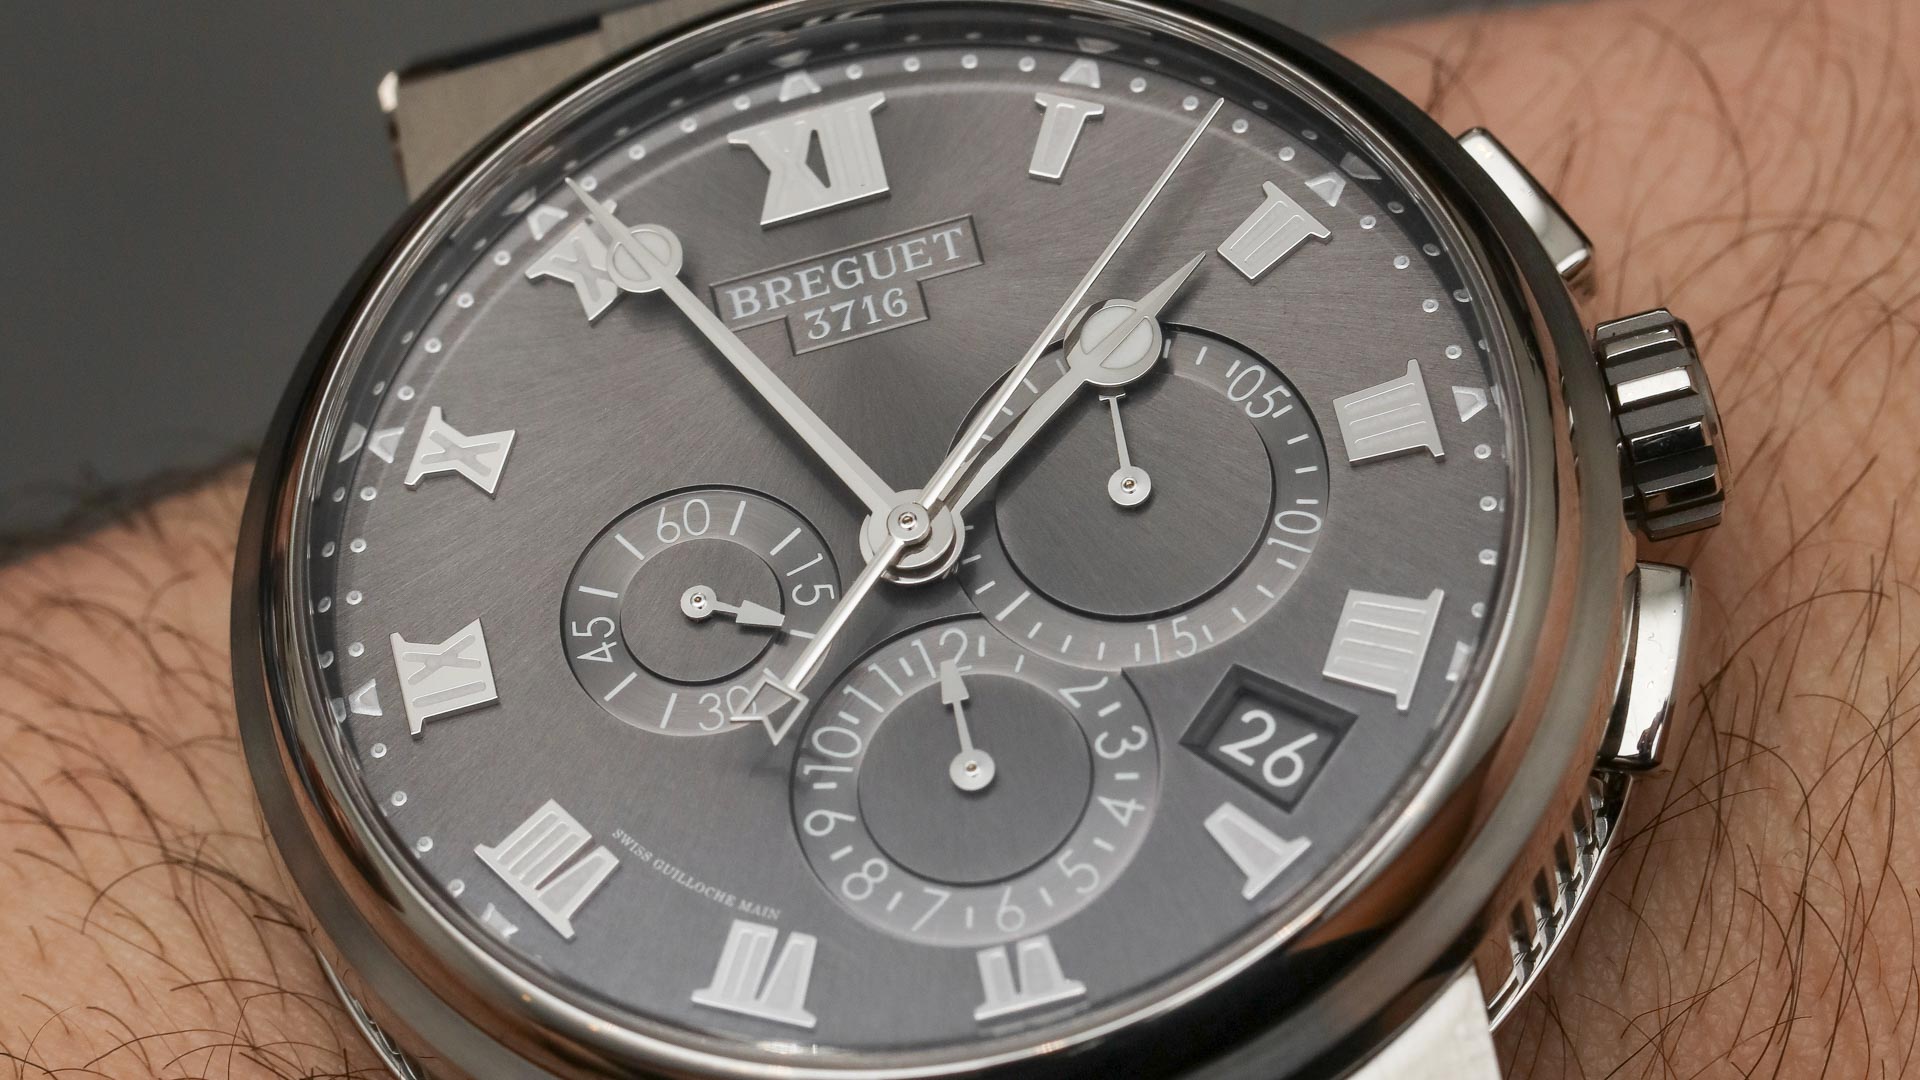 Breguet Marine Chronograph 5527 Titanium Watch Hands-On